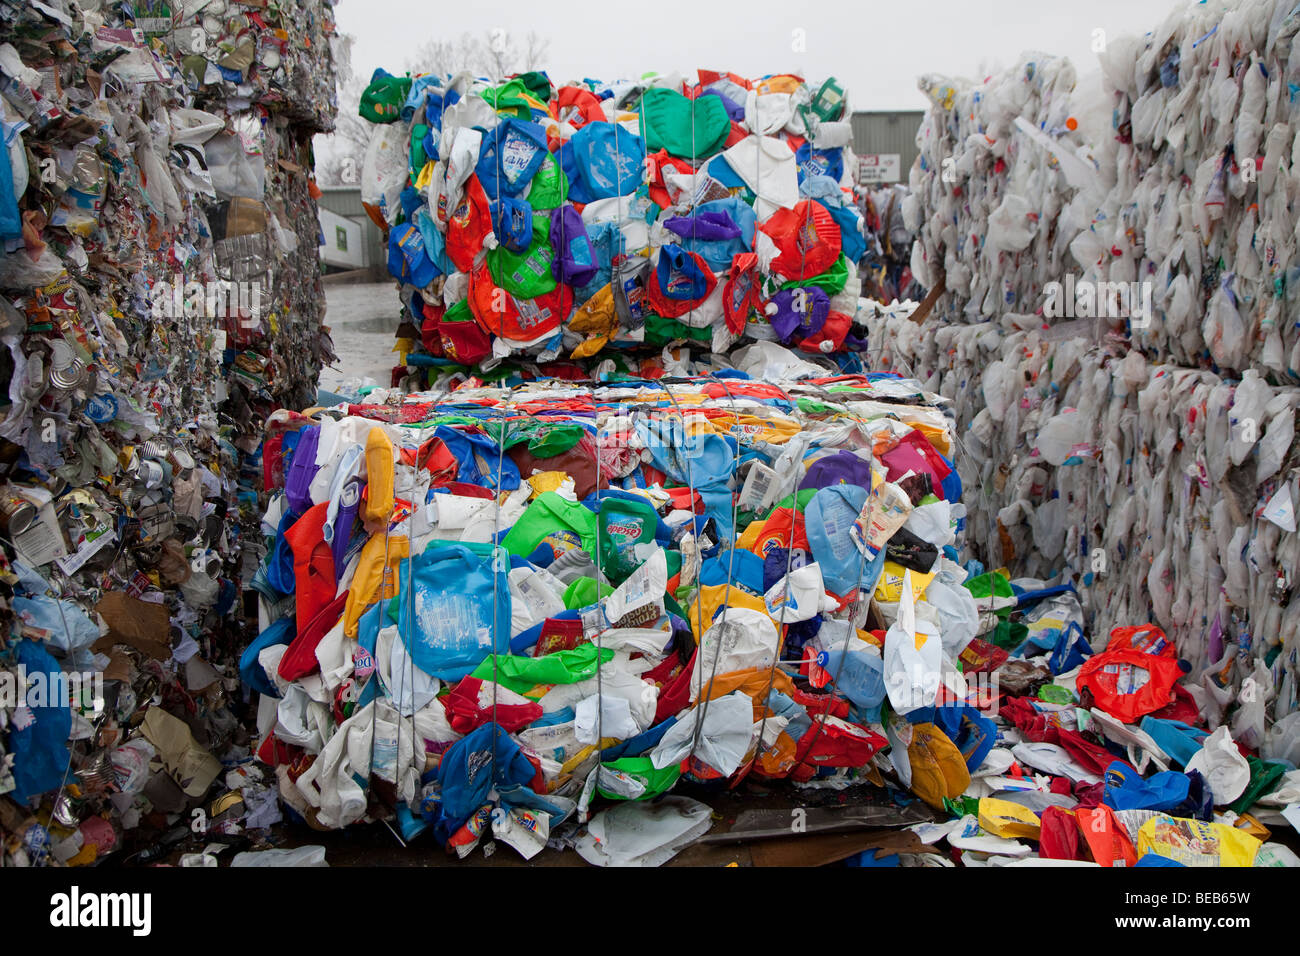 Roseville, Michigan - Ballen für Great Lakes Recycling recycling Kunststoff-Flaschen. Stockfoto